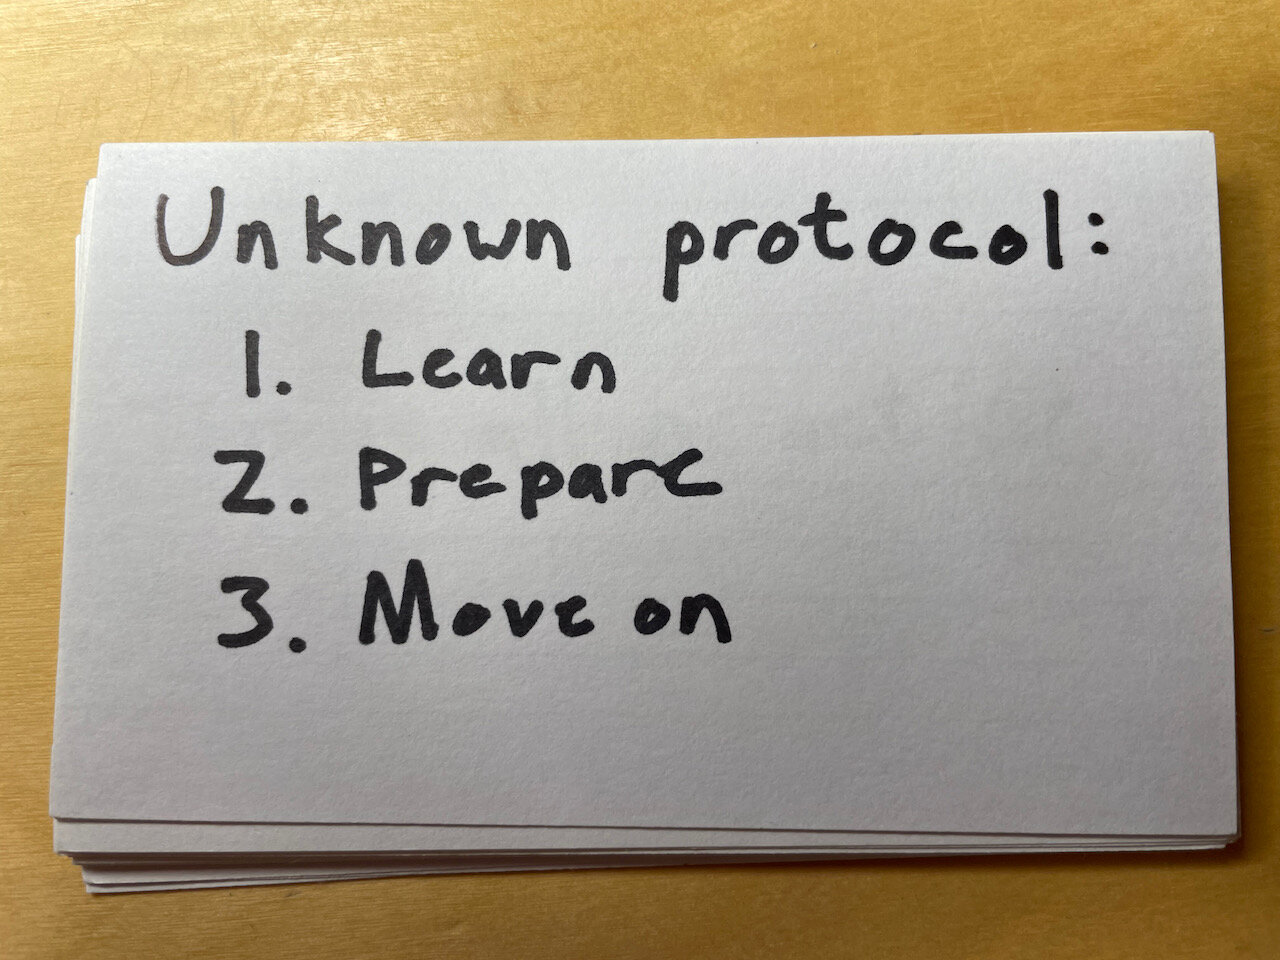 Unknown protocol